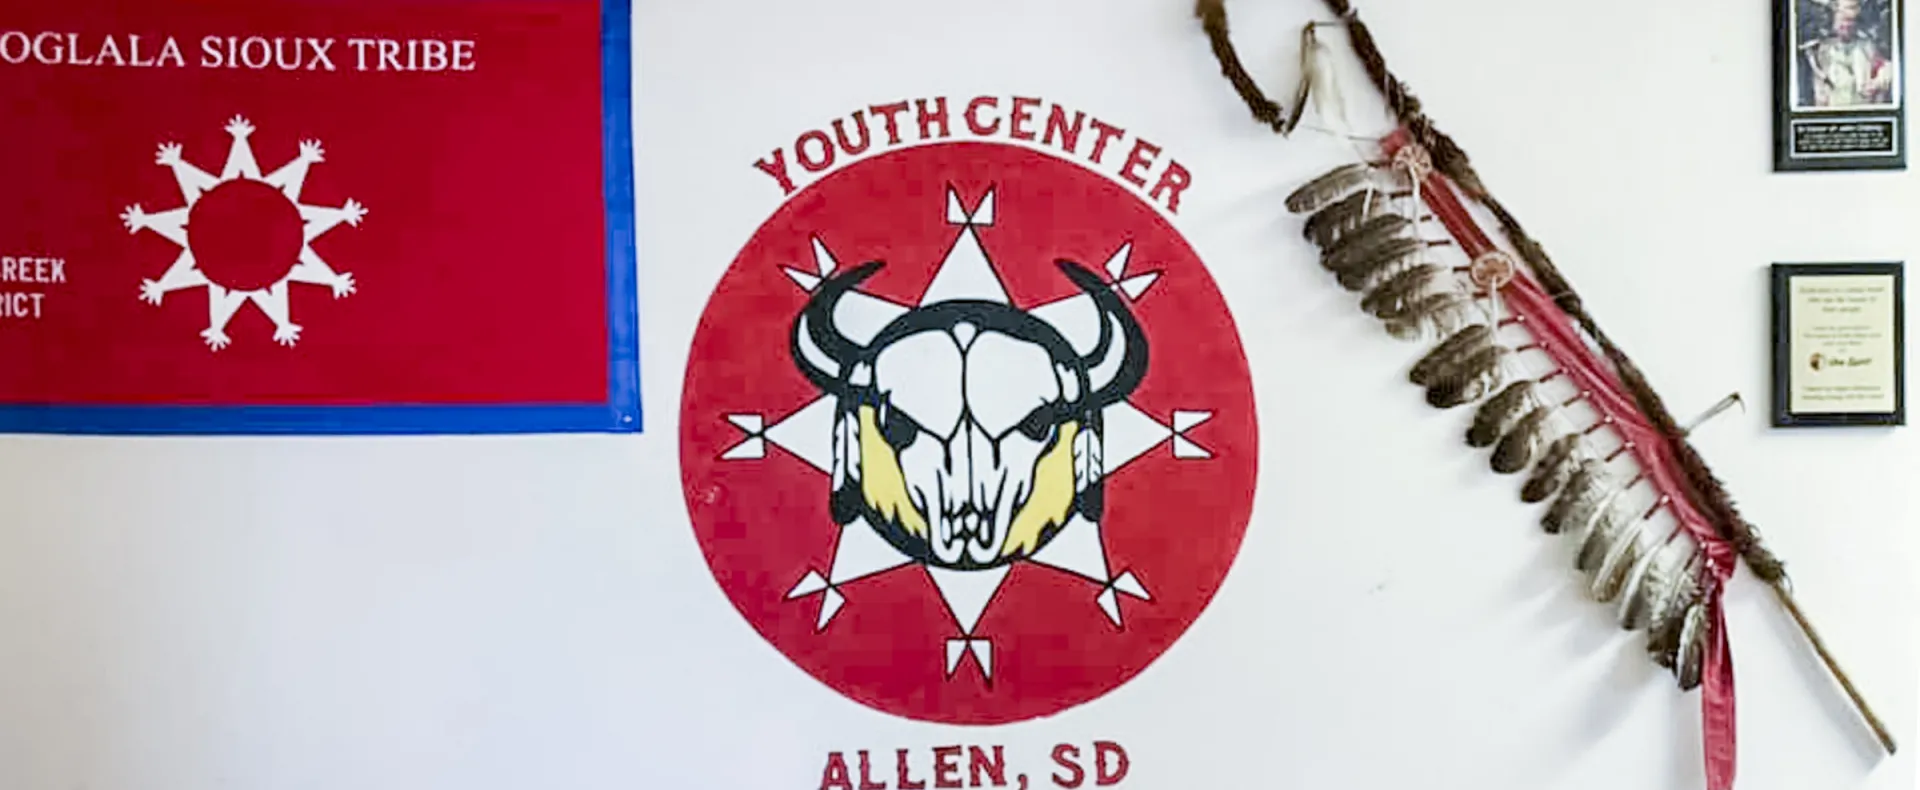 A flag and bison skull logo mark the white wall of the Lakota's Youth Center in Allen, South Dakota.